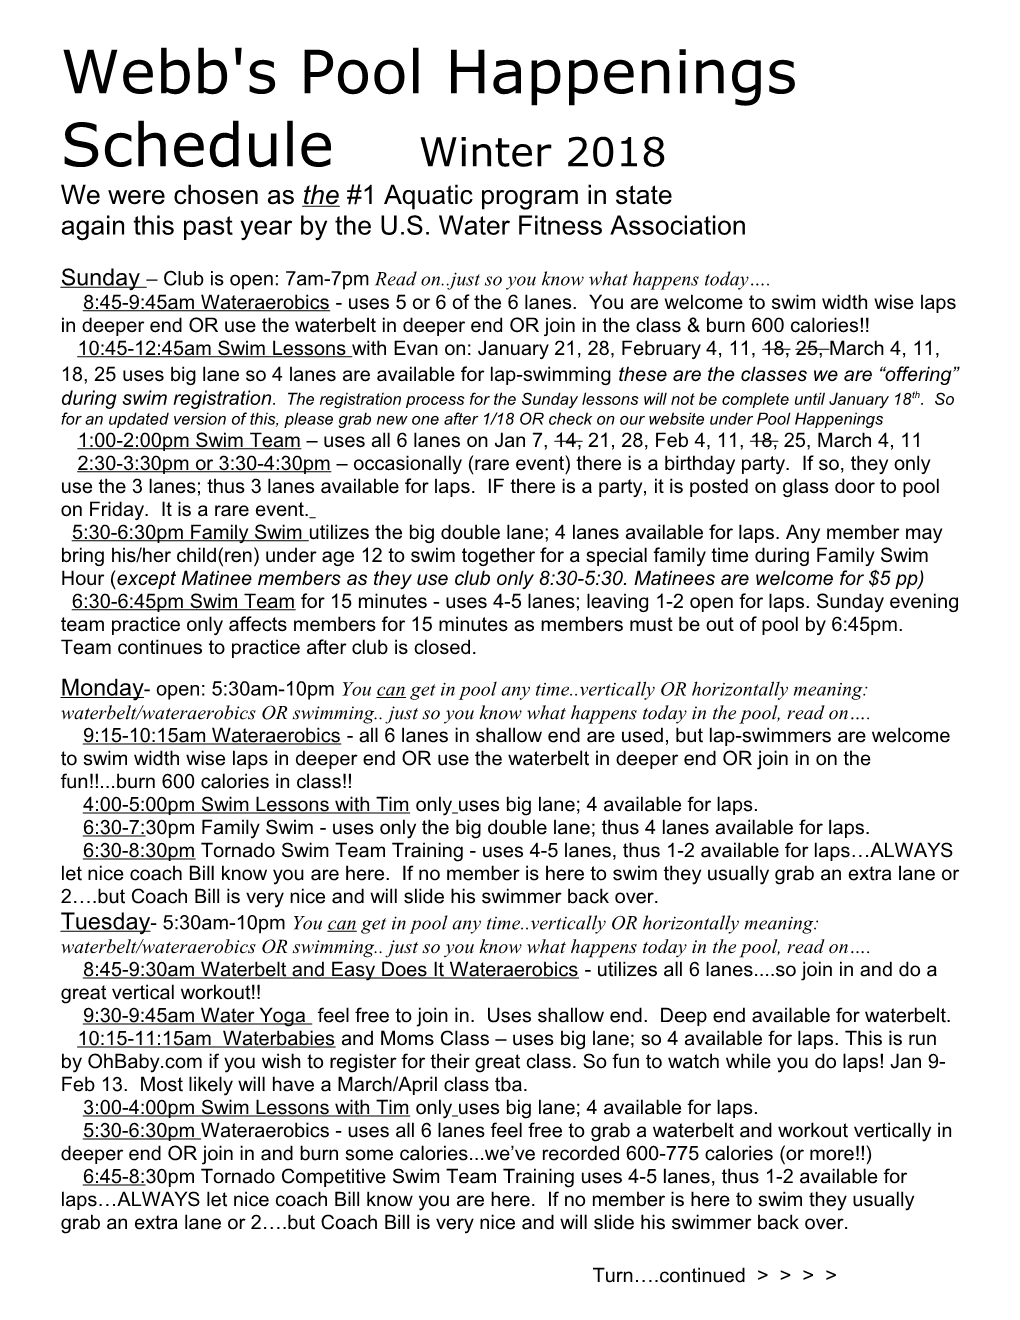 Webb's Pool Happenings Schedule Winter 2018 We Werechosen As the #1 Aquatic Program In